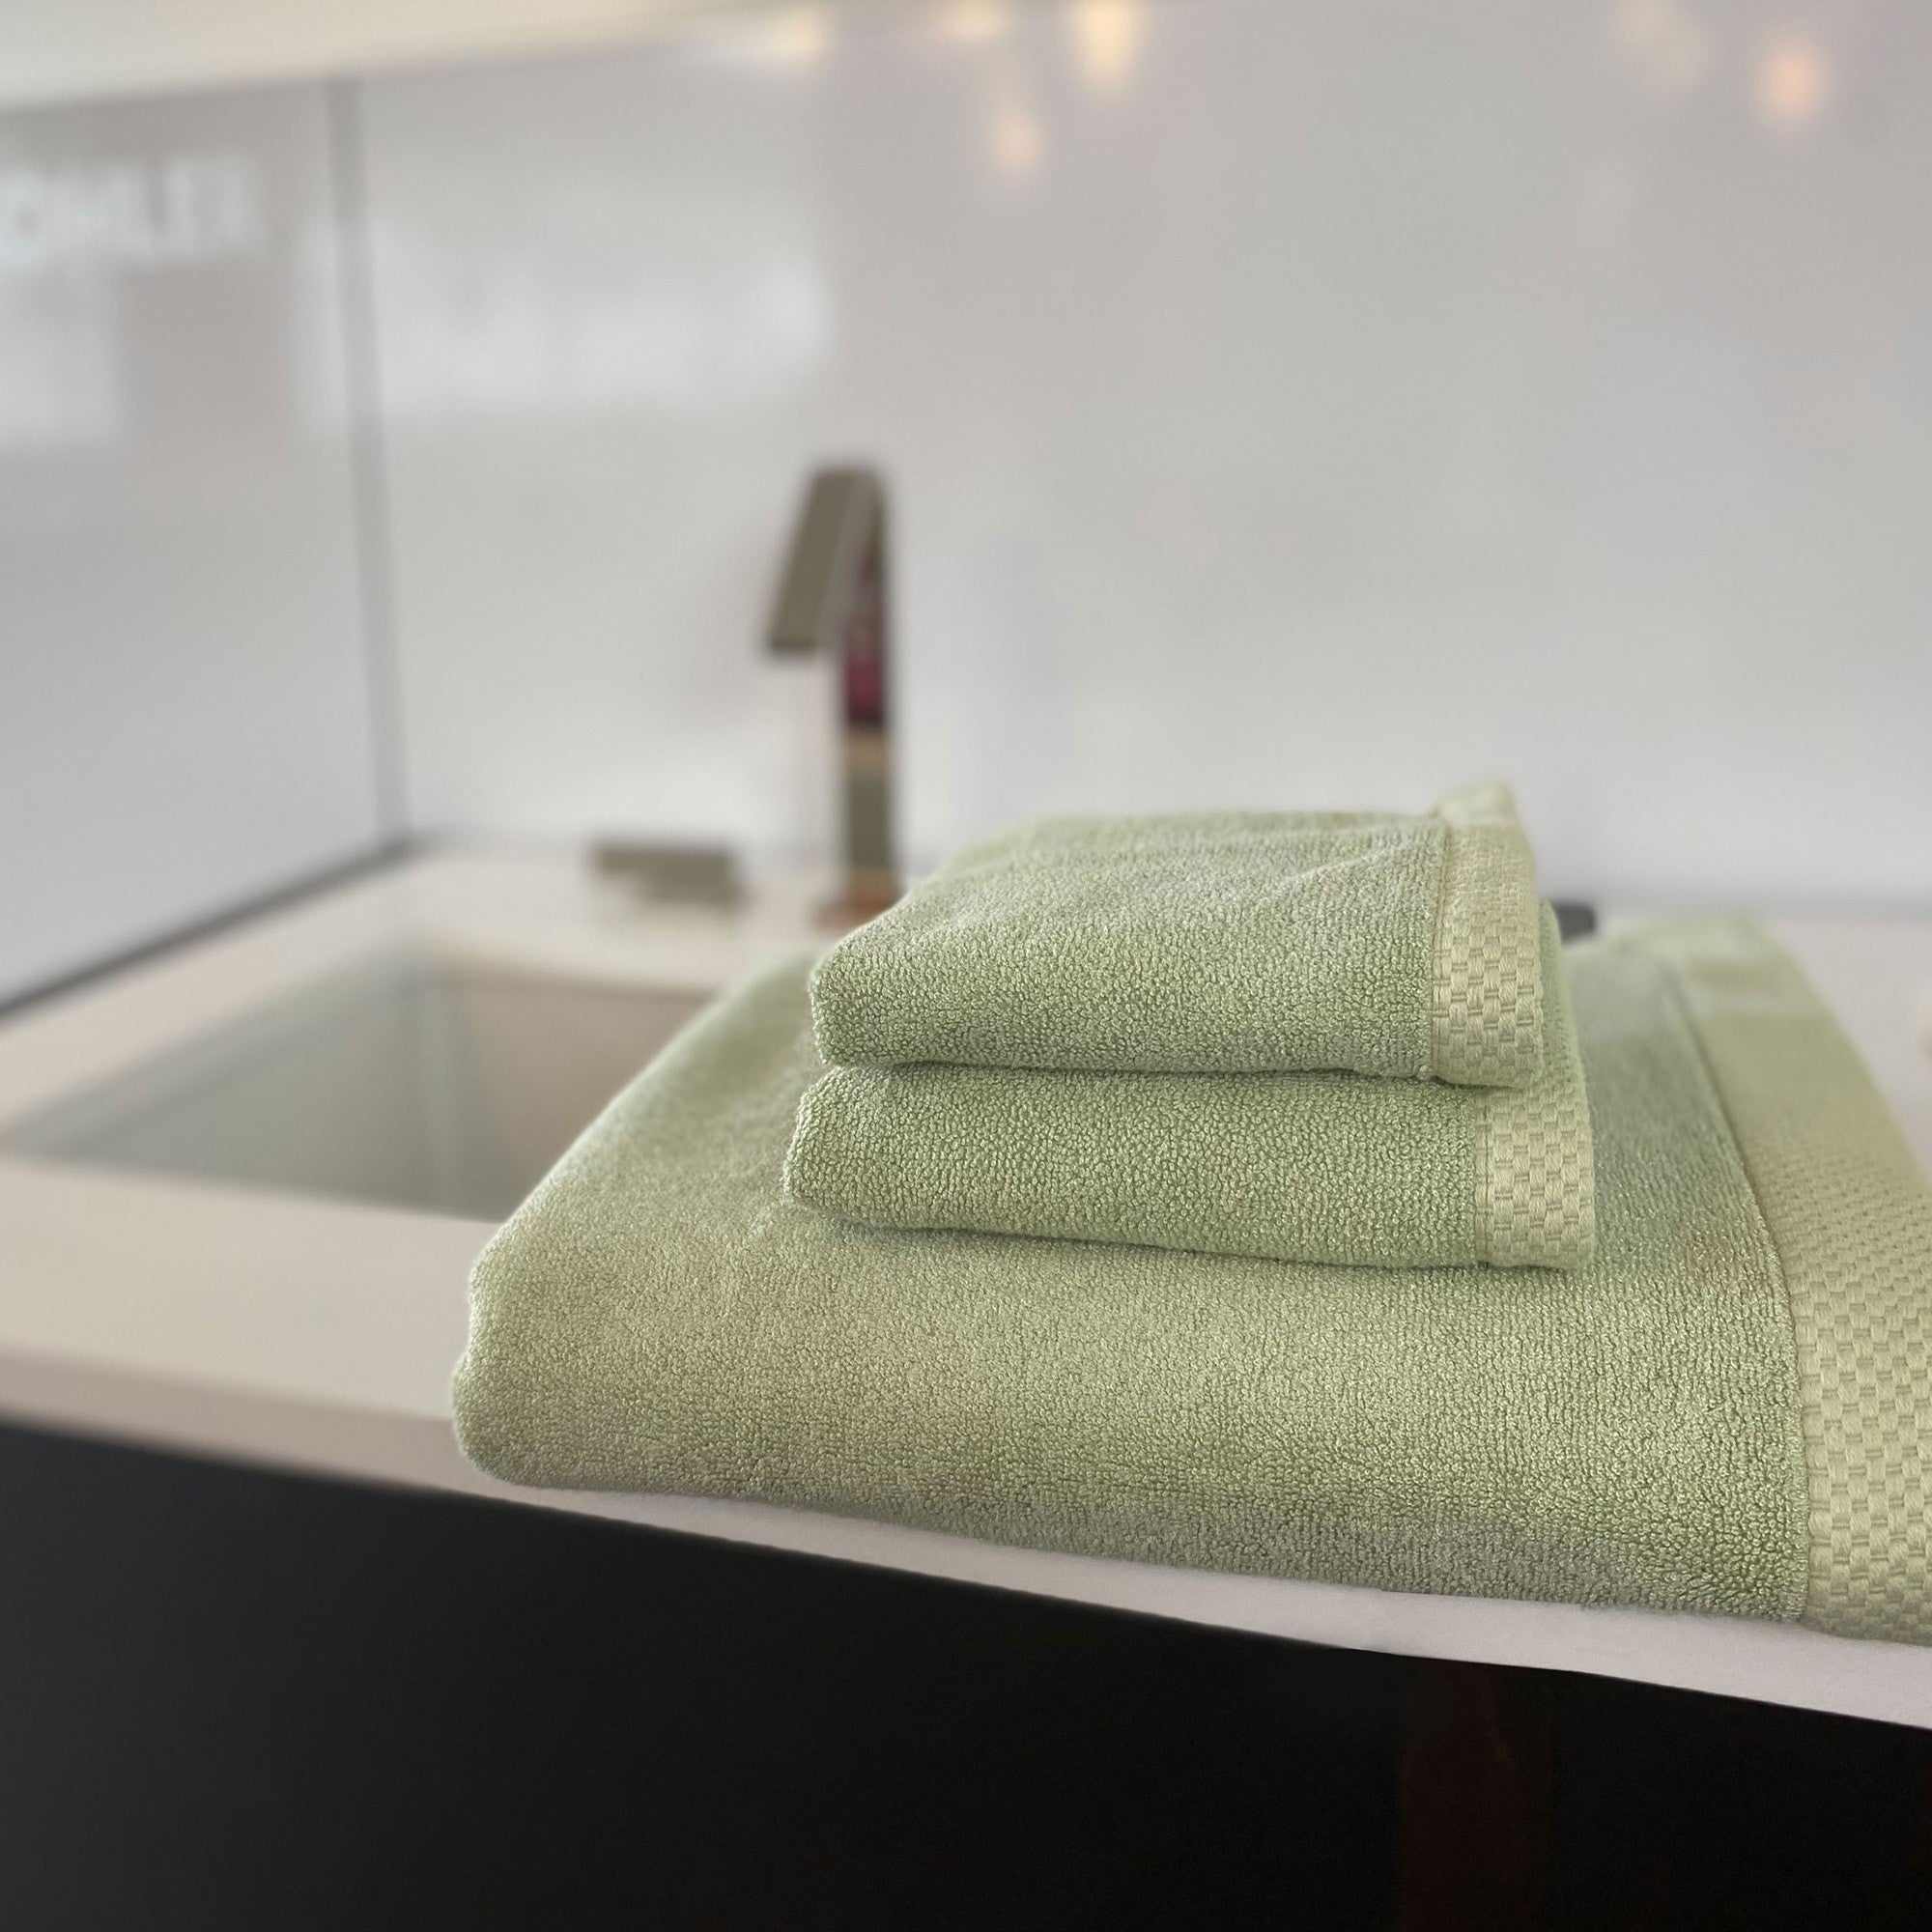 Luxury BAMBOO Towel Set 3Pcs - Traditional Cotton Towel, 3x's More Absorbent Bath Towel Sets - Sage